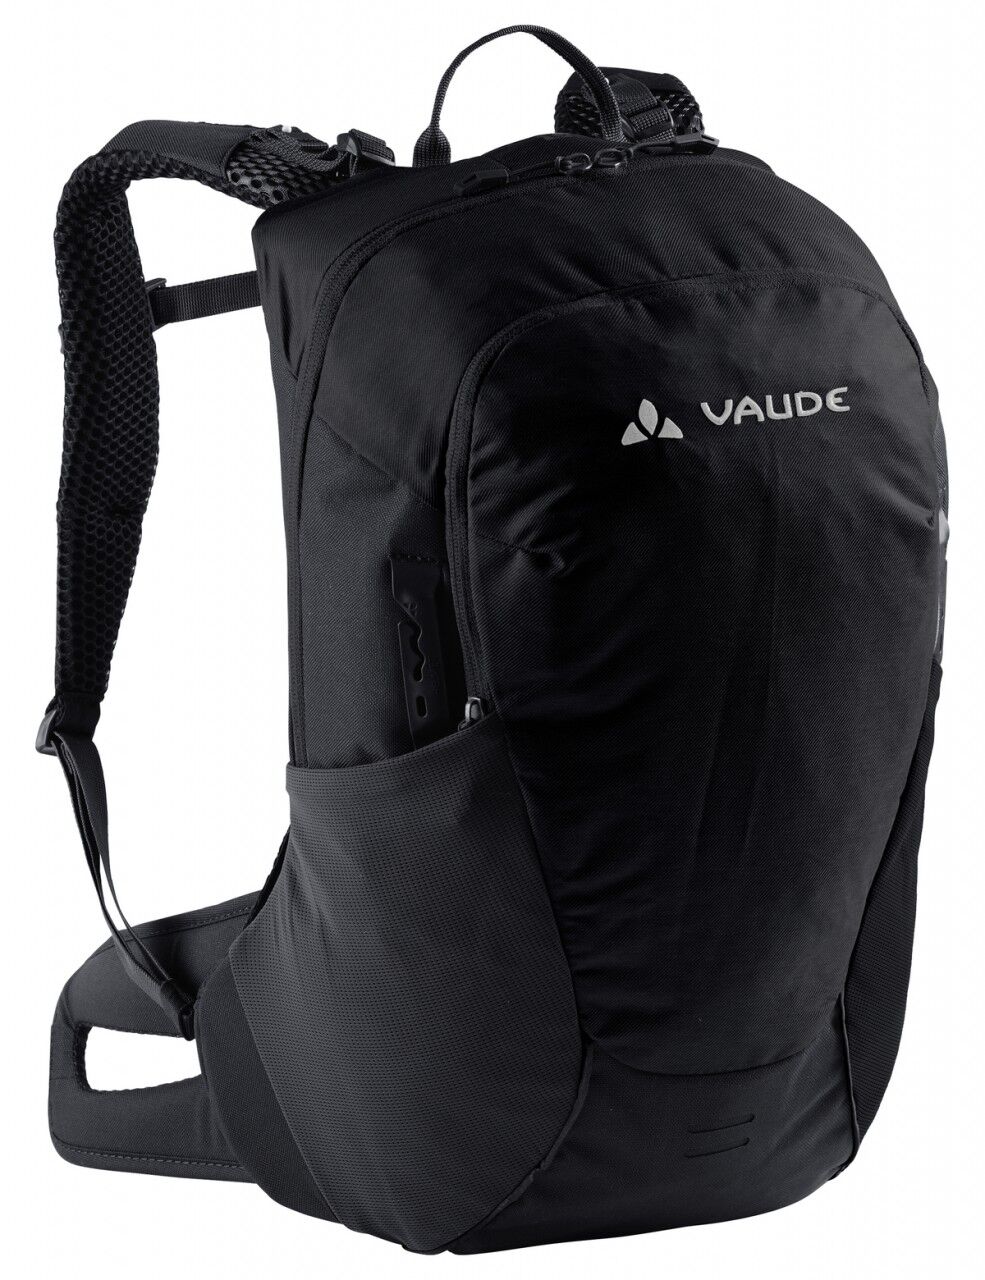 Vaude Tremalzo 12 - Cycling backpack - Women's